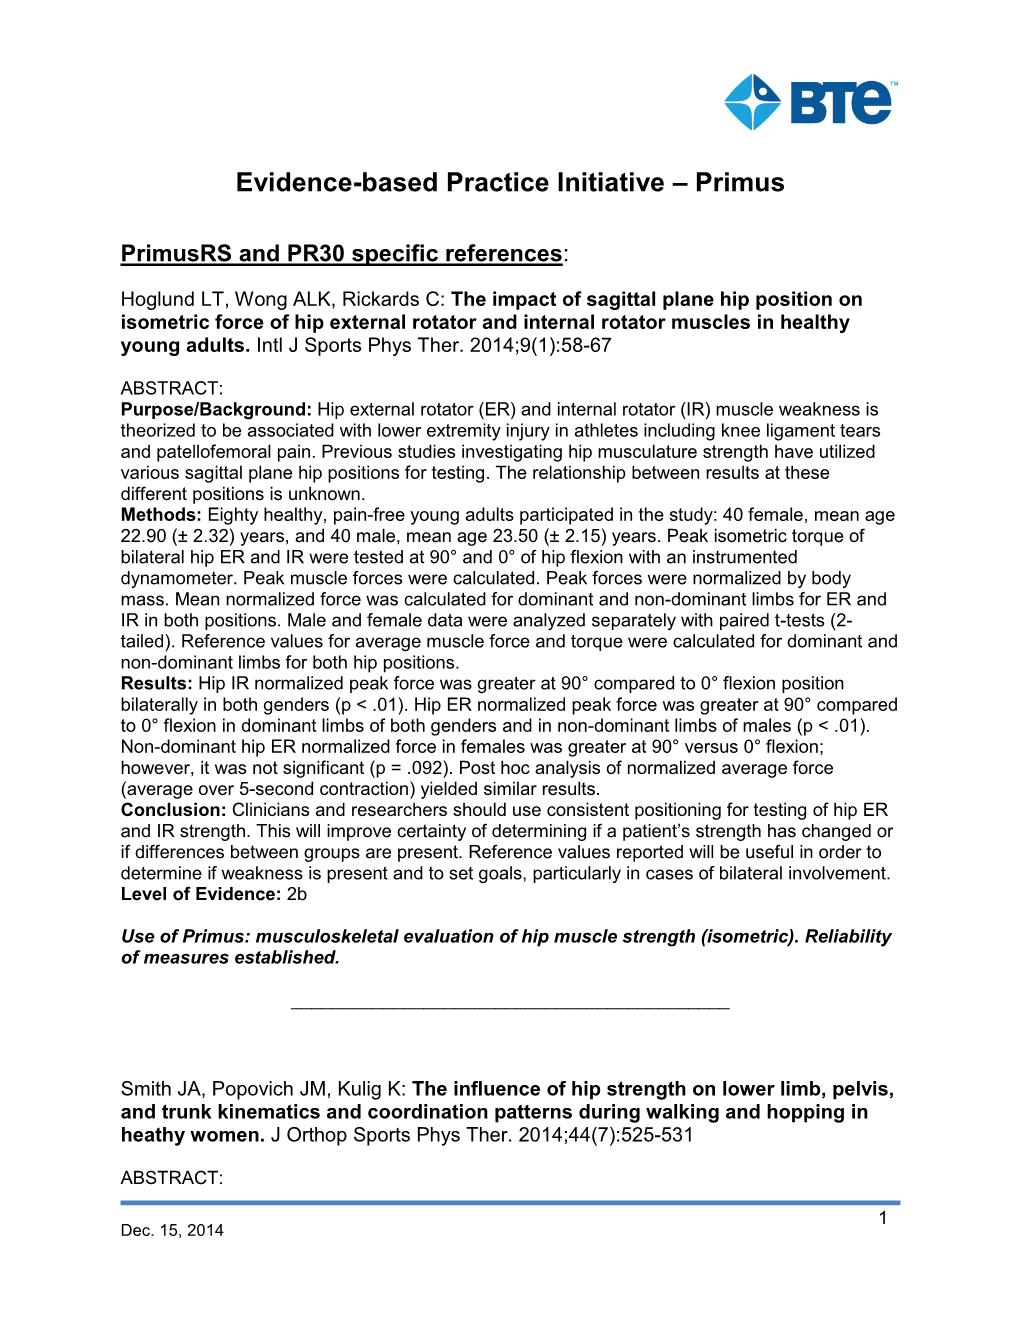 Evidence-Based Practice Initiative – Primus